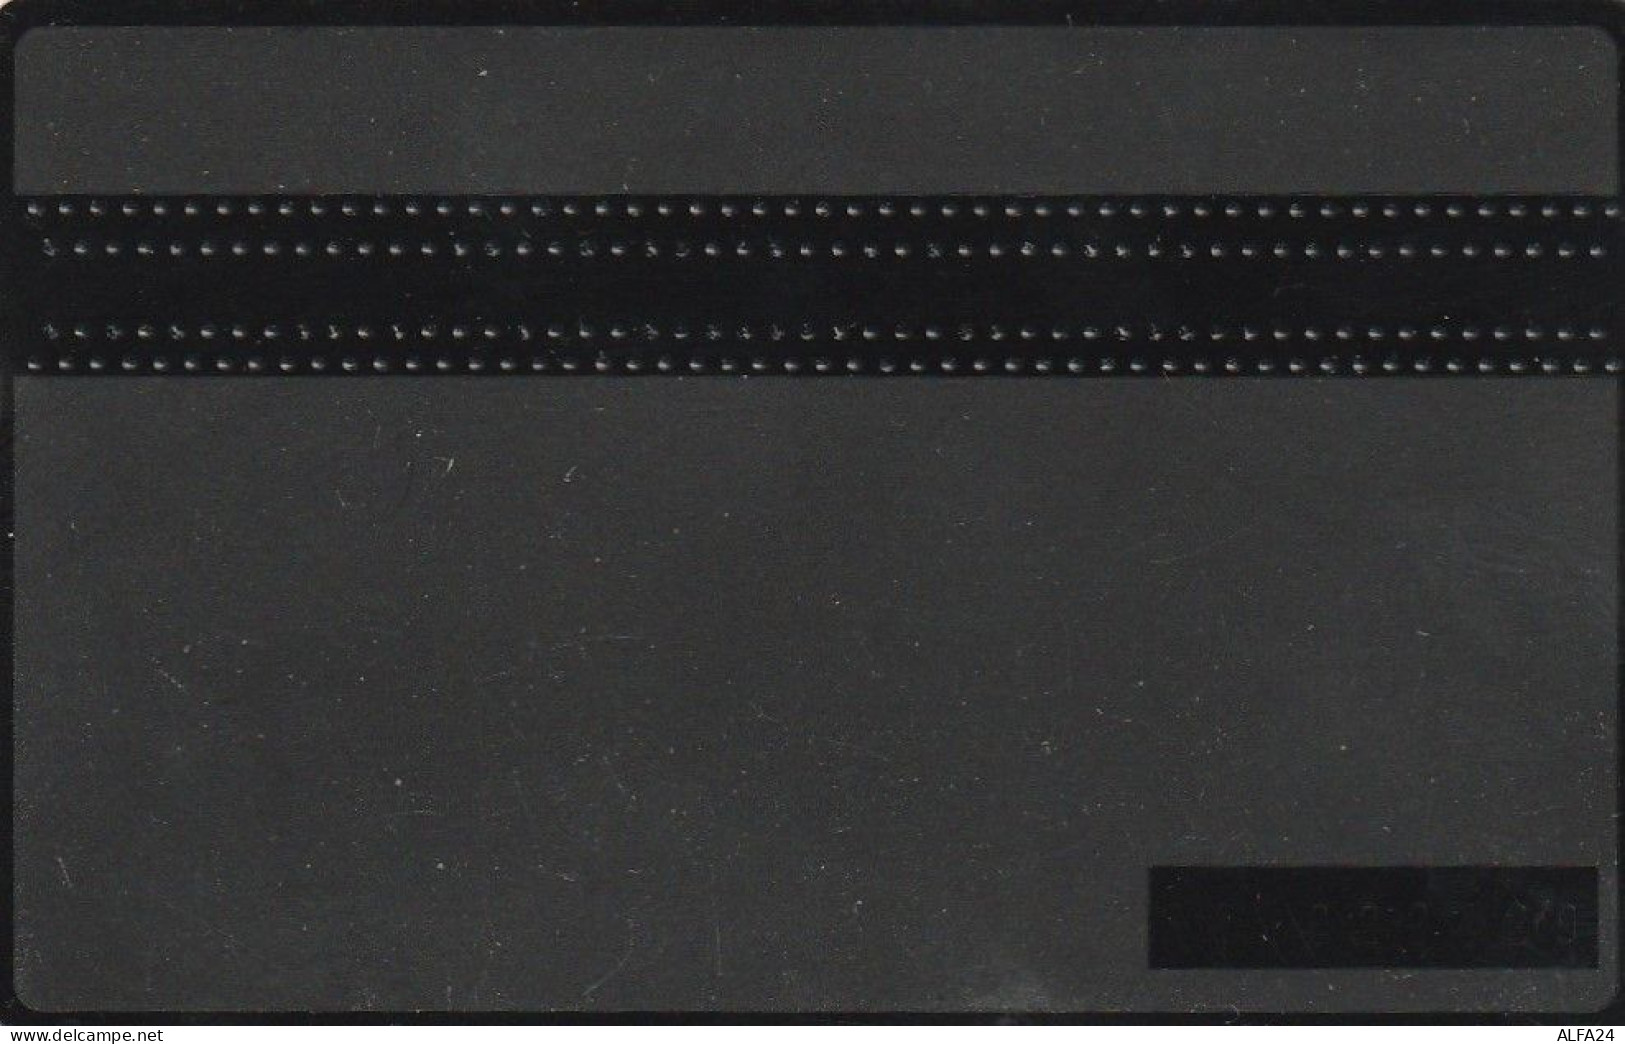 PHONE CARD BELGIO LG (CV6656 - Senza Chip